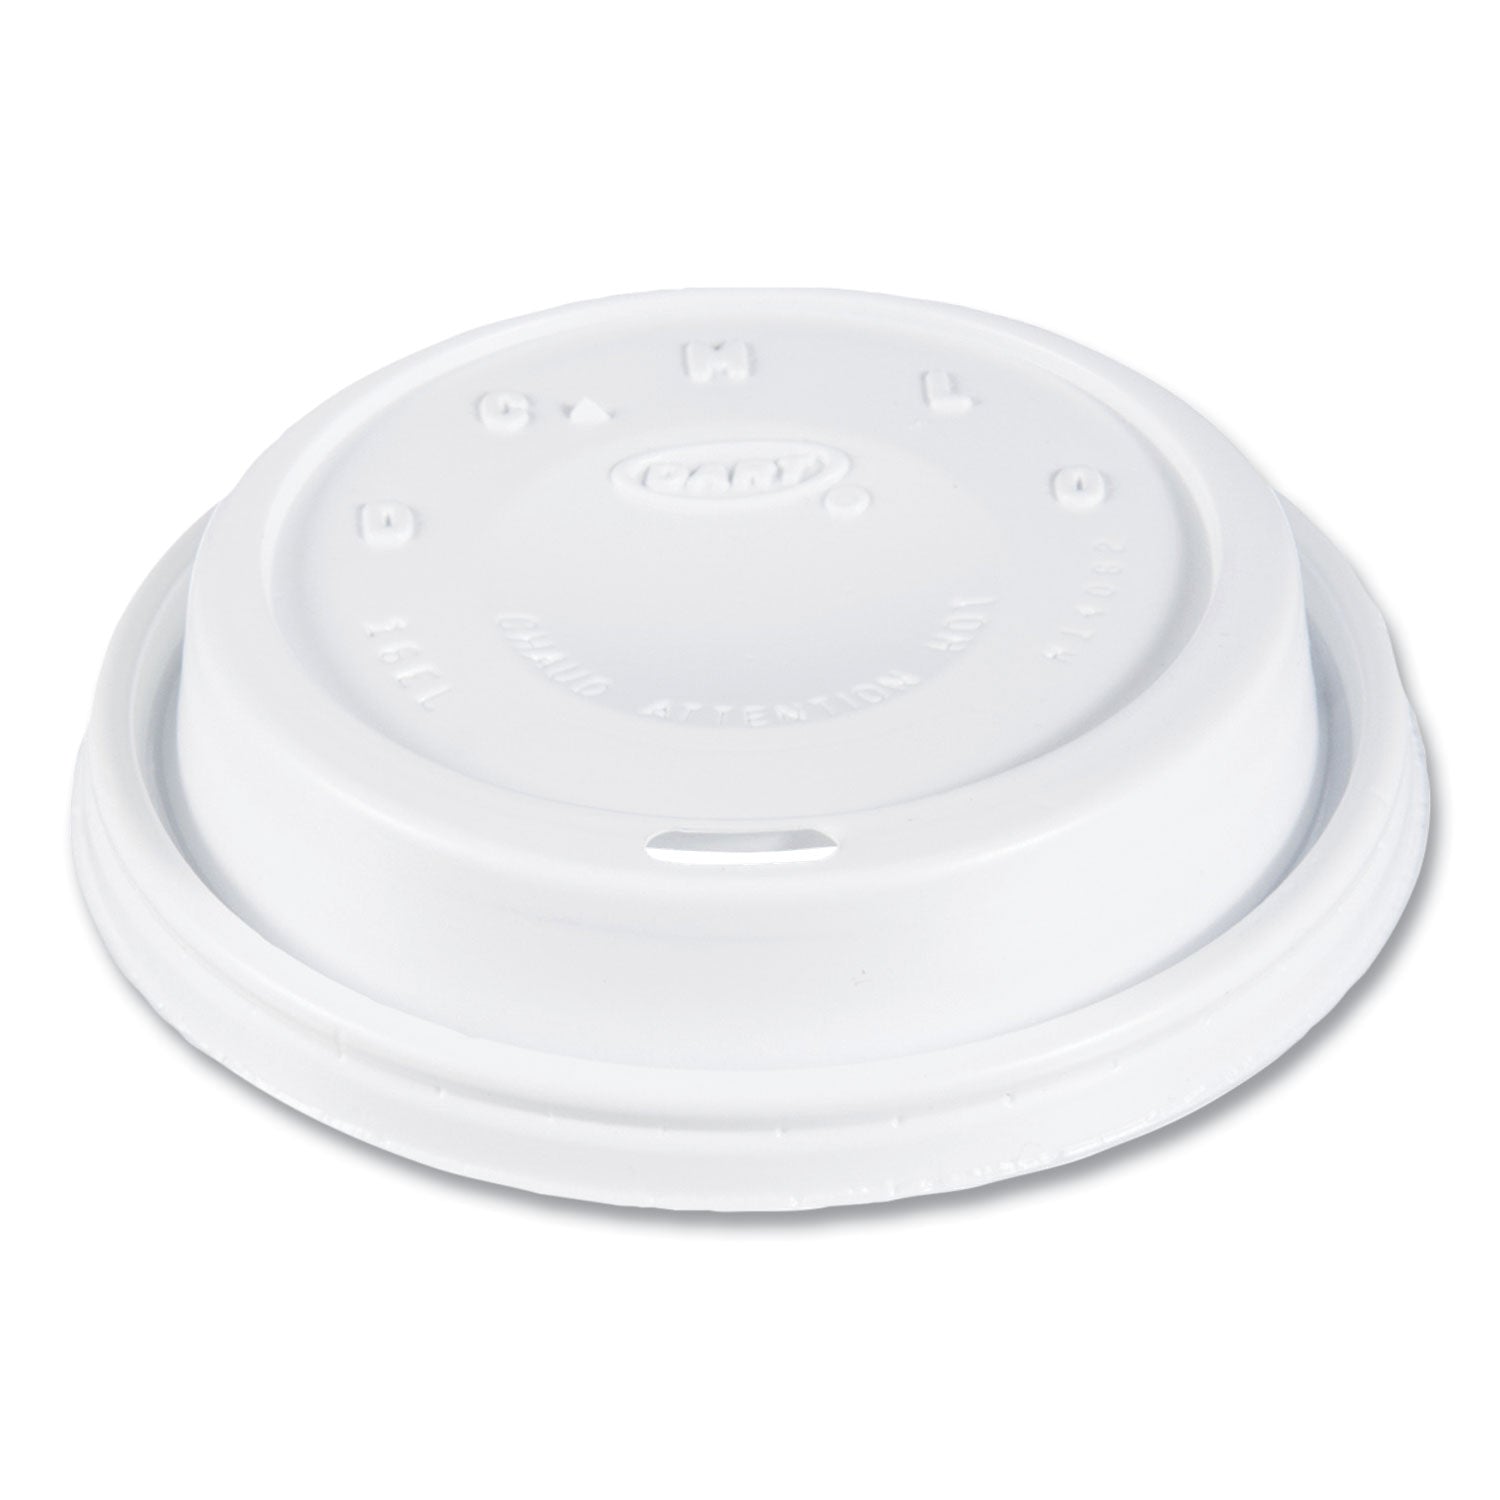 Cappuccino Dome Sipper Lids, Fits 12 oz to 24 oz Cups, White, 1,000/Carton - 